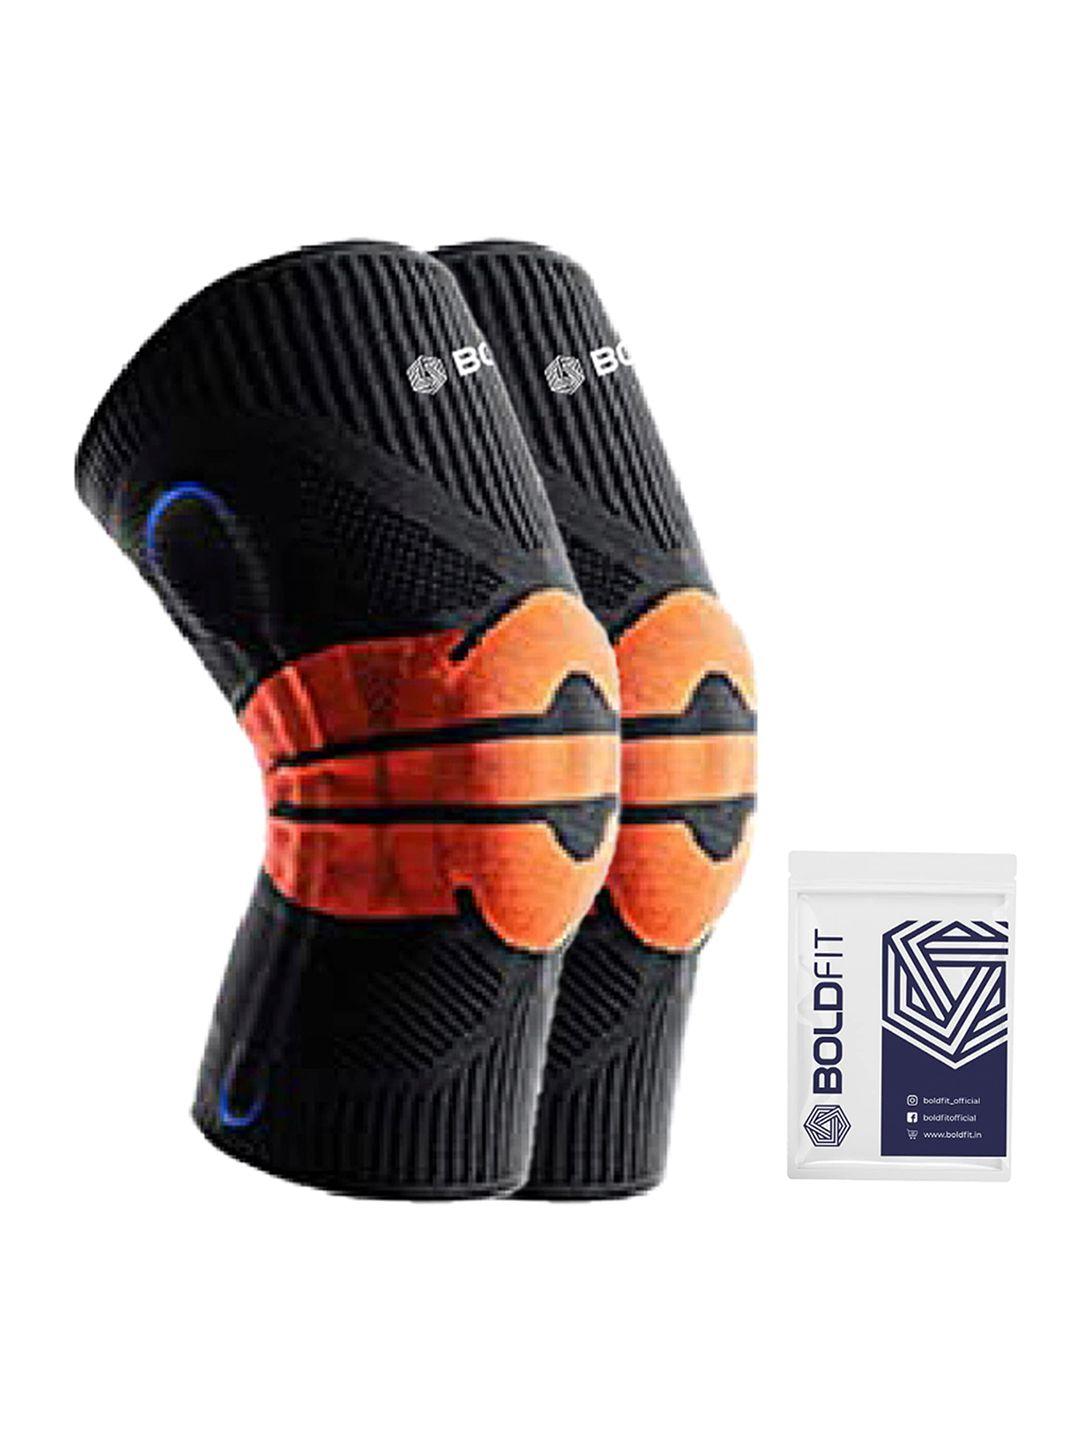 boldfit unisex orange & black knee support sports accessories